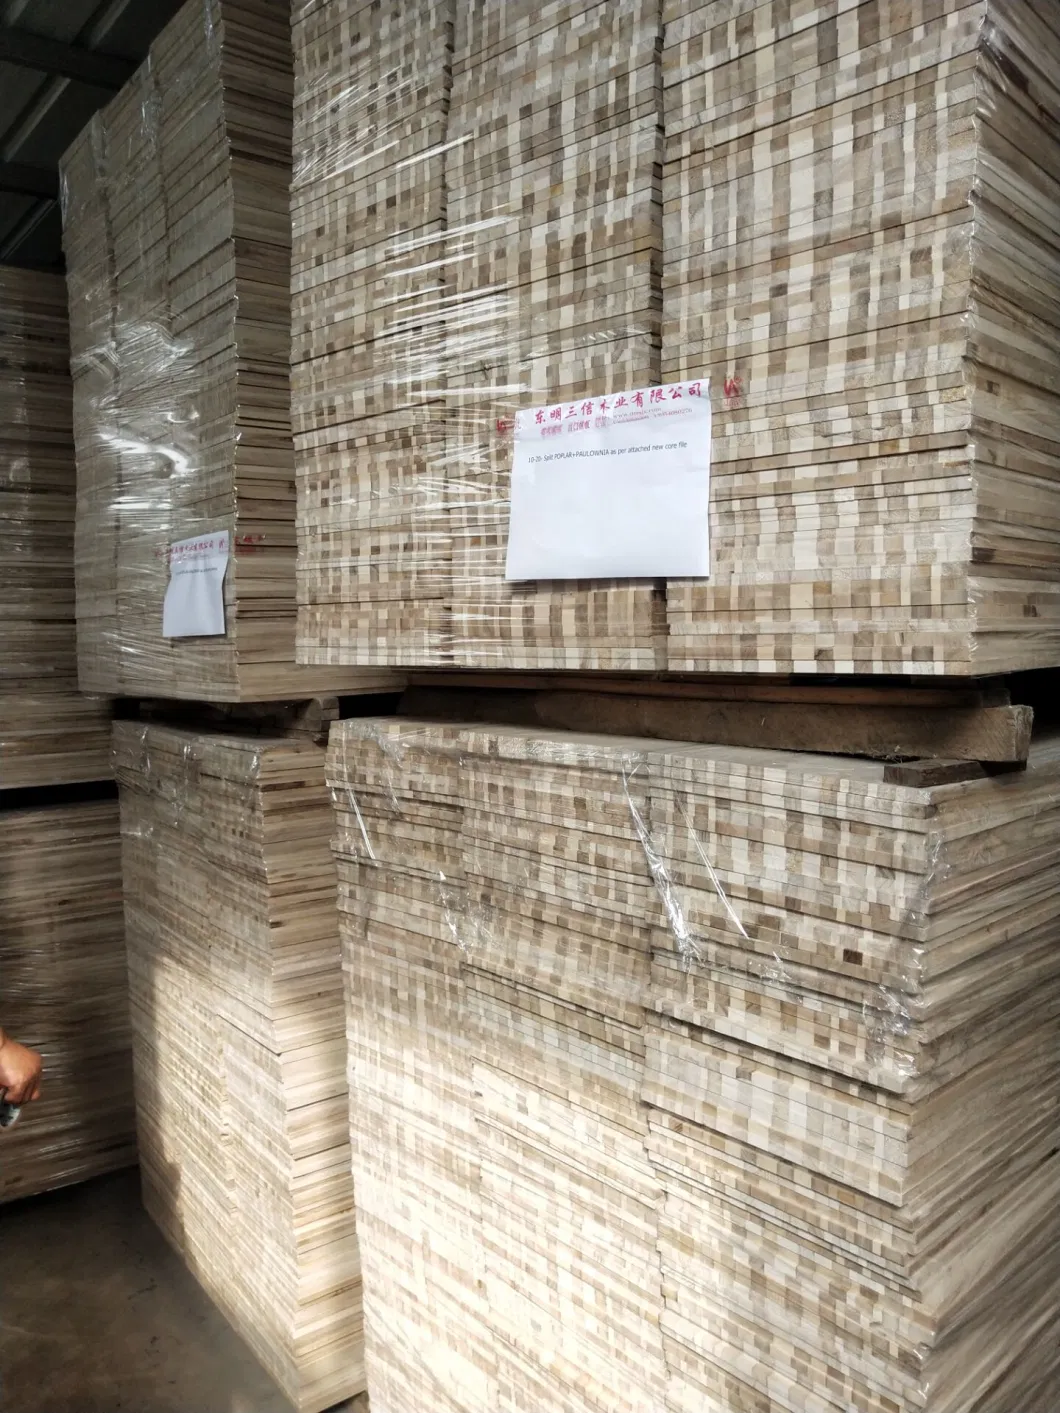 Trade Assurance Pine/Paulownia Wood Timber Paulownia Lumber Price MDF Moulding